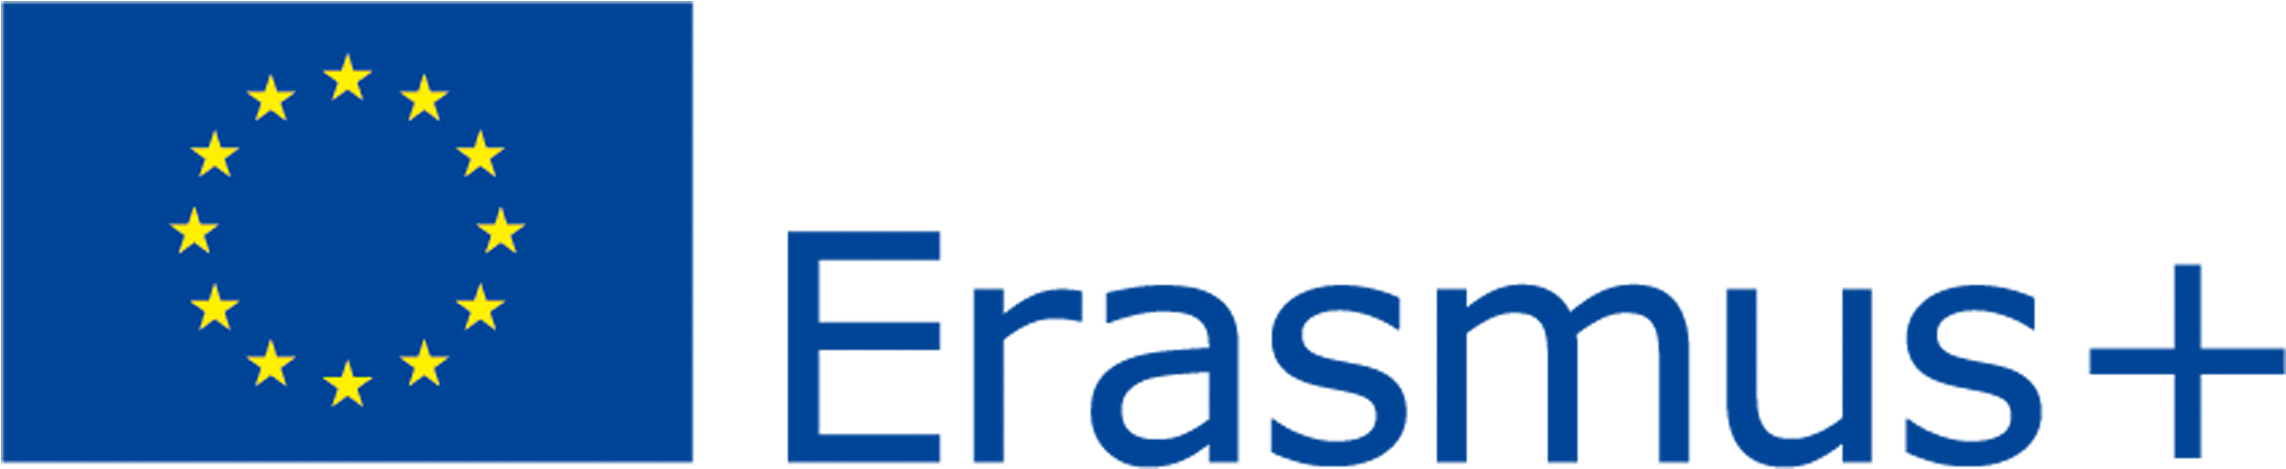 Willkommen Am Ucf - Erasmus Plus Logo Png (828x177), Png Download